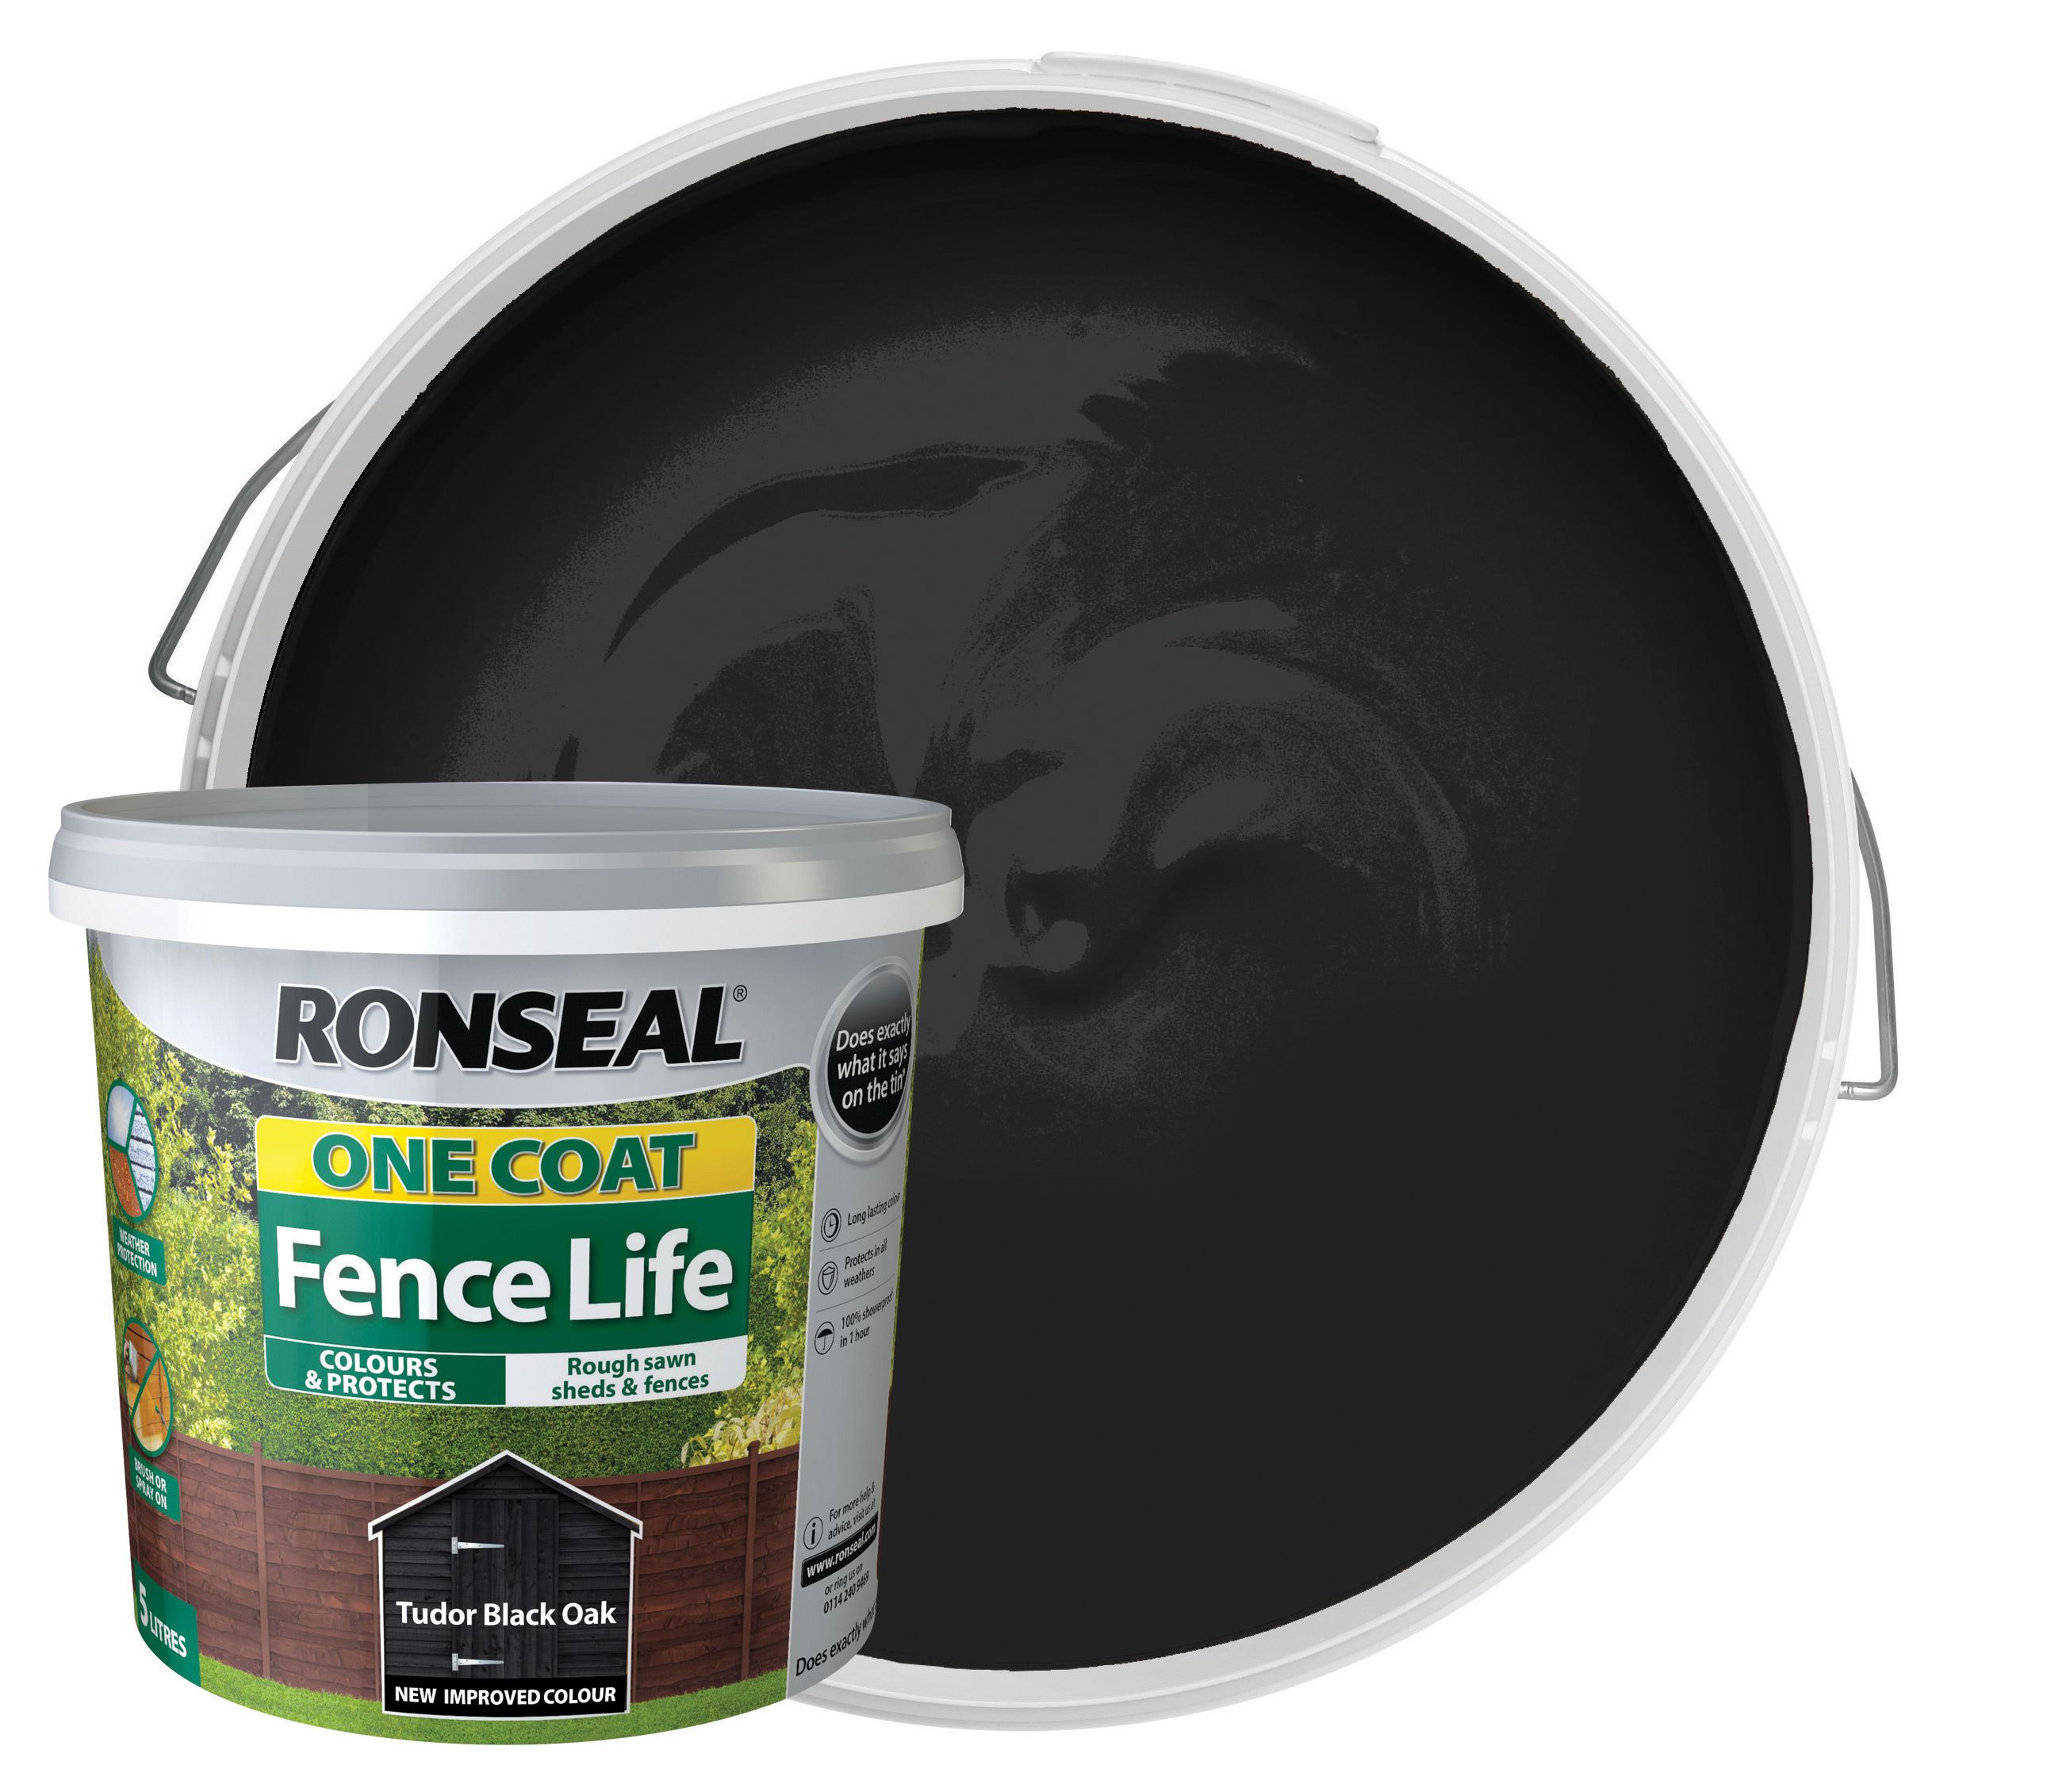 Ronseal One Coat Fence Life Matt Shed & Fence Treatment - Tudor Black Oak 5L